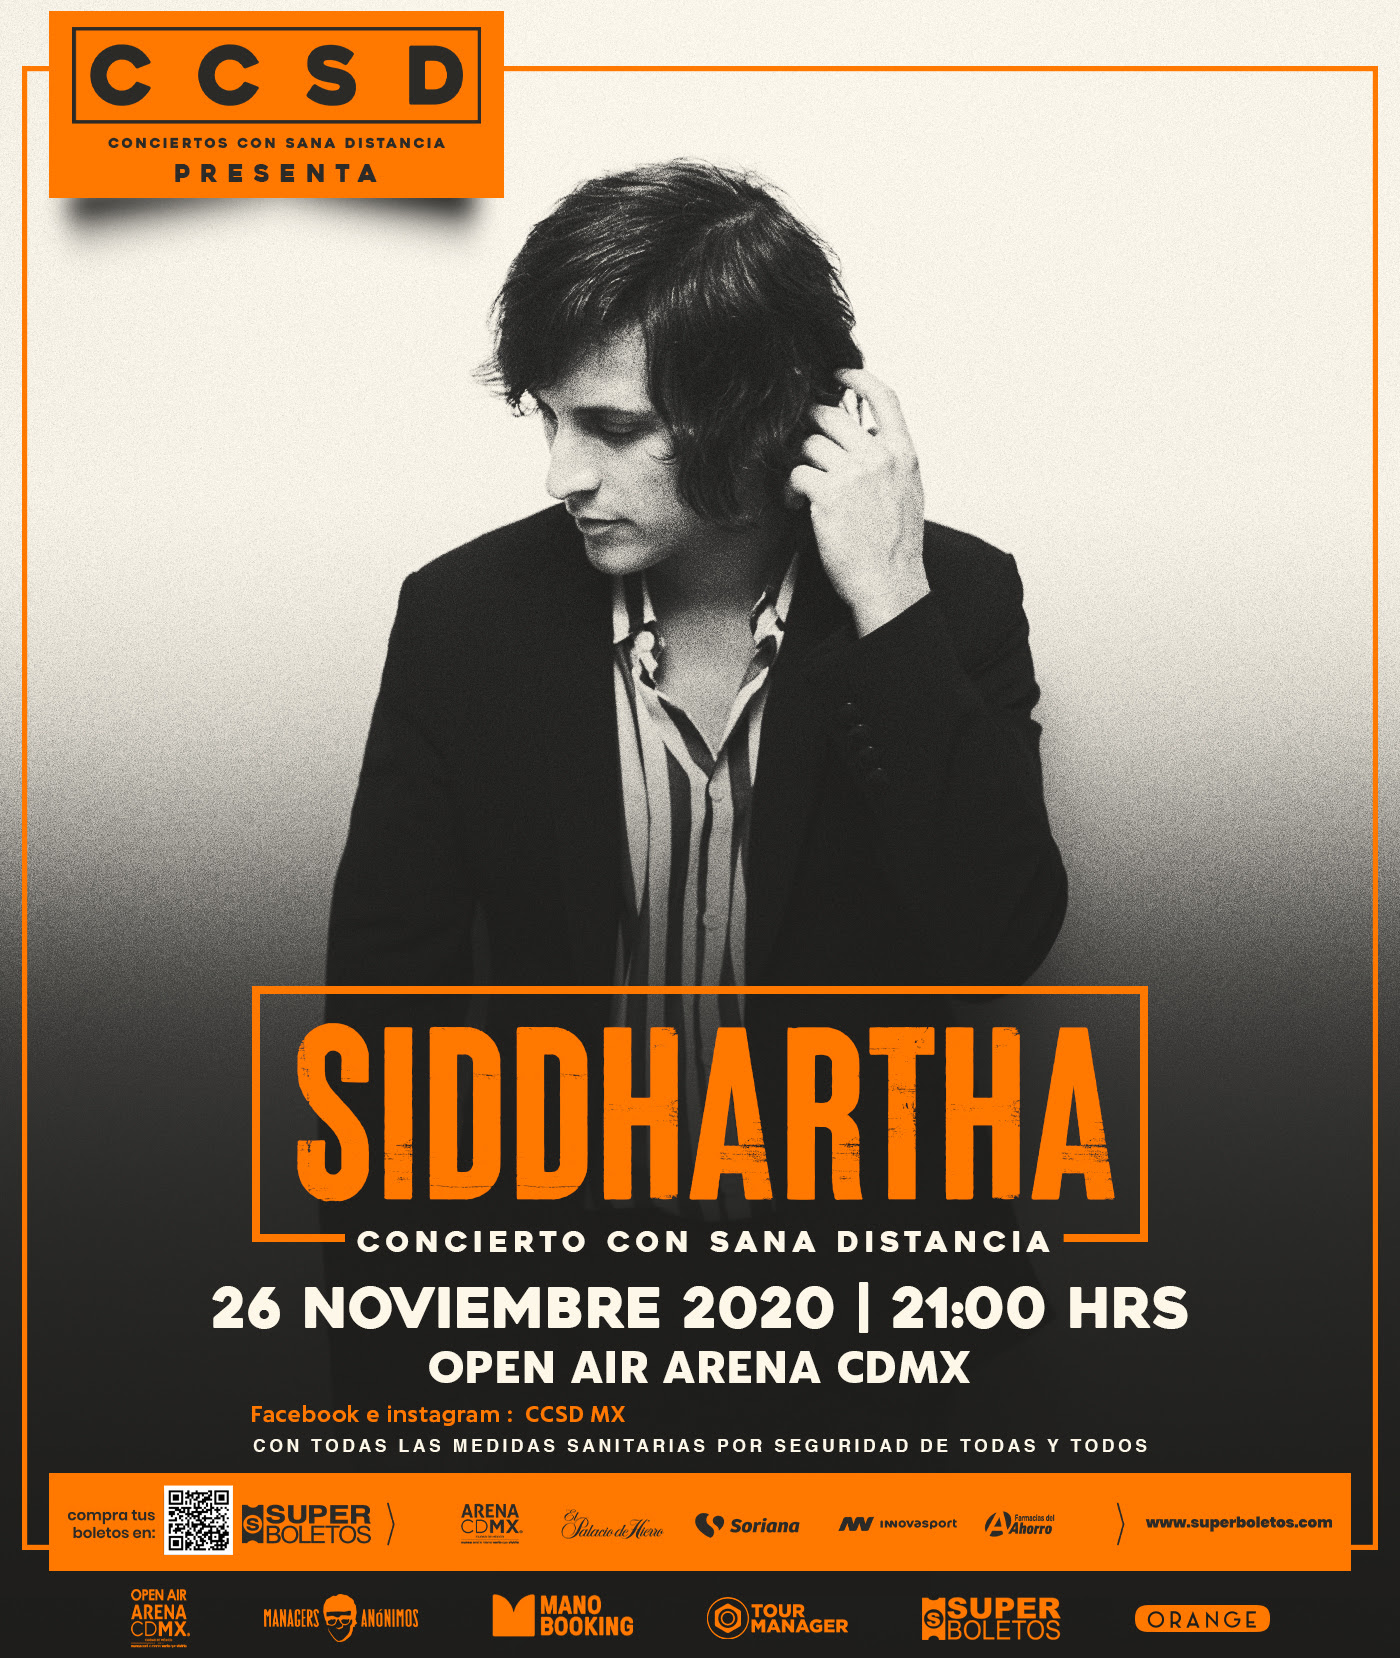 Siddhartha anuncia concierto presencial con sana distancia